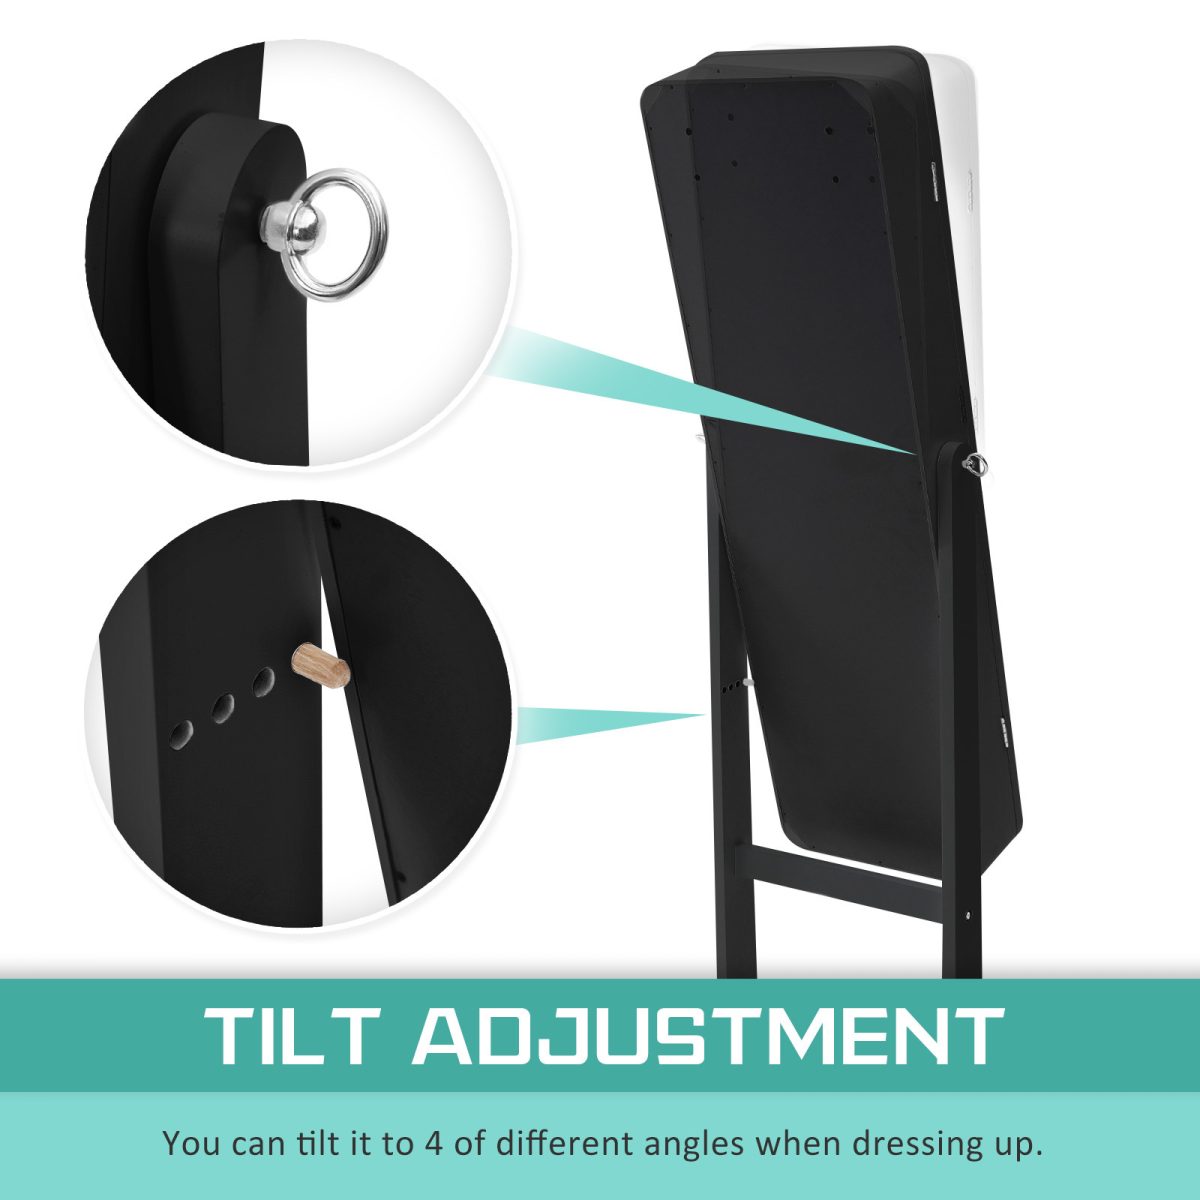 La Bella Mirror Jewellery Cabinet FLASHY 146cm Organiser LED – Black